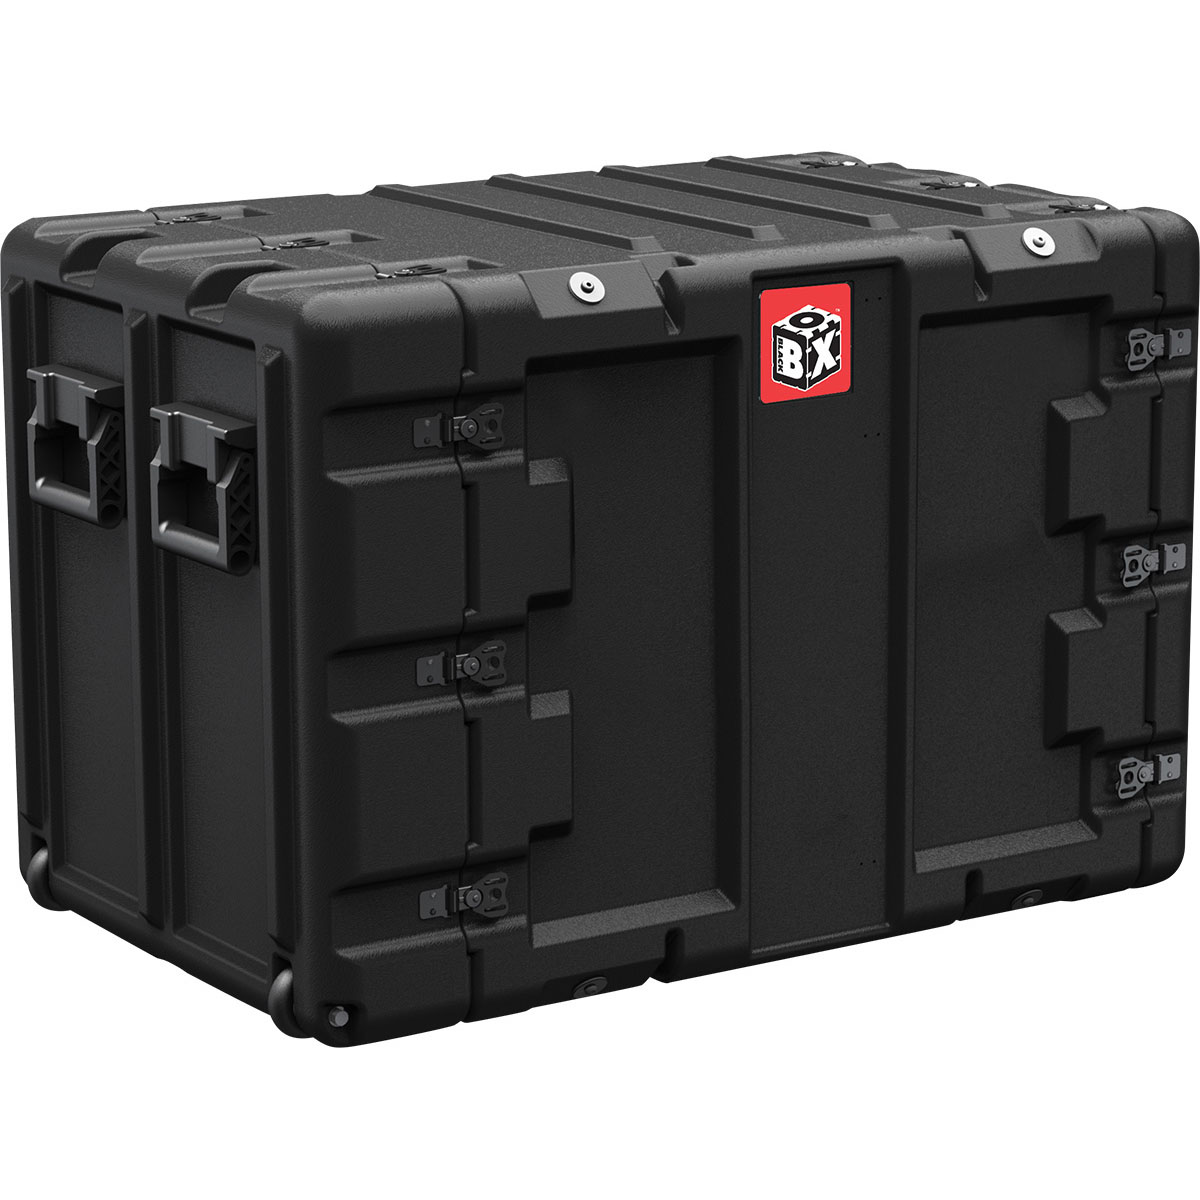 Peli BlackBox 11U Rack Mount Case